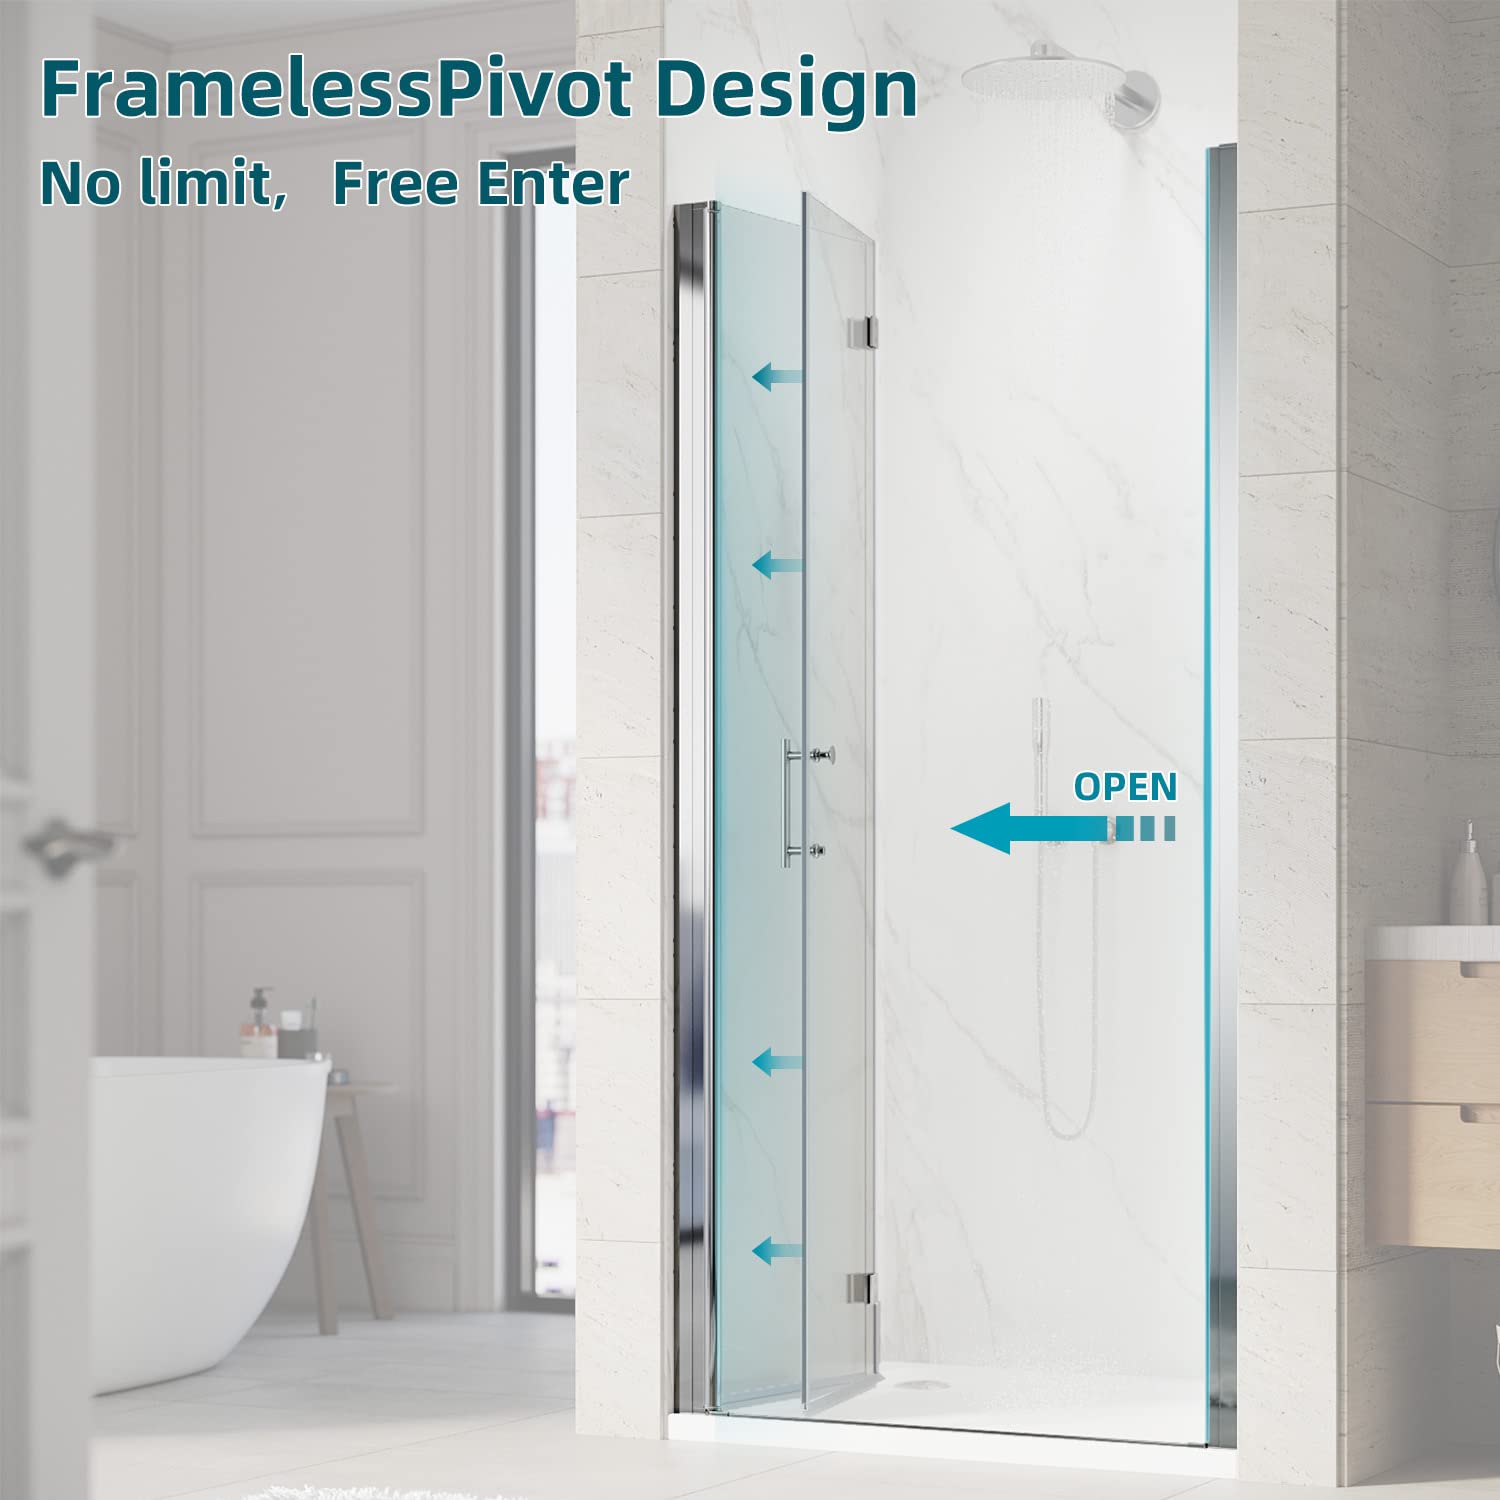 frameless pivot design：no limit, free enter